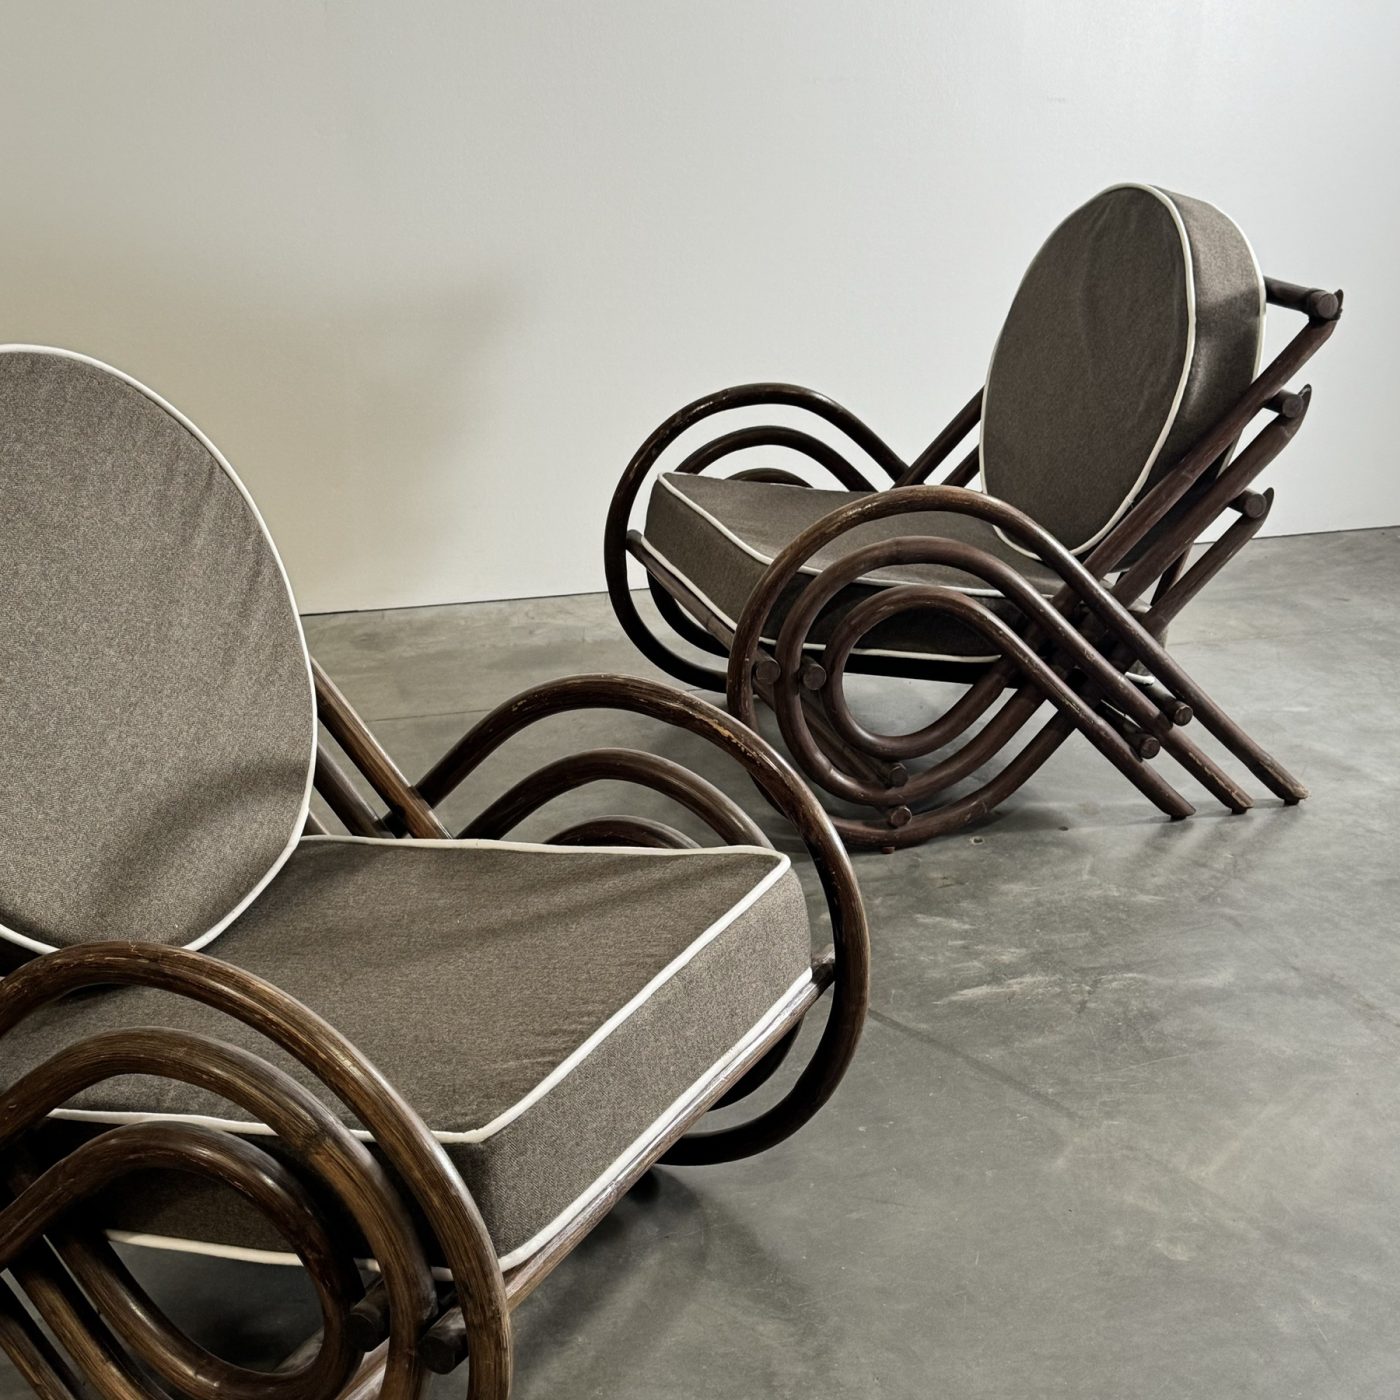 objet-vagabond-rattan-armchairs0001